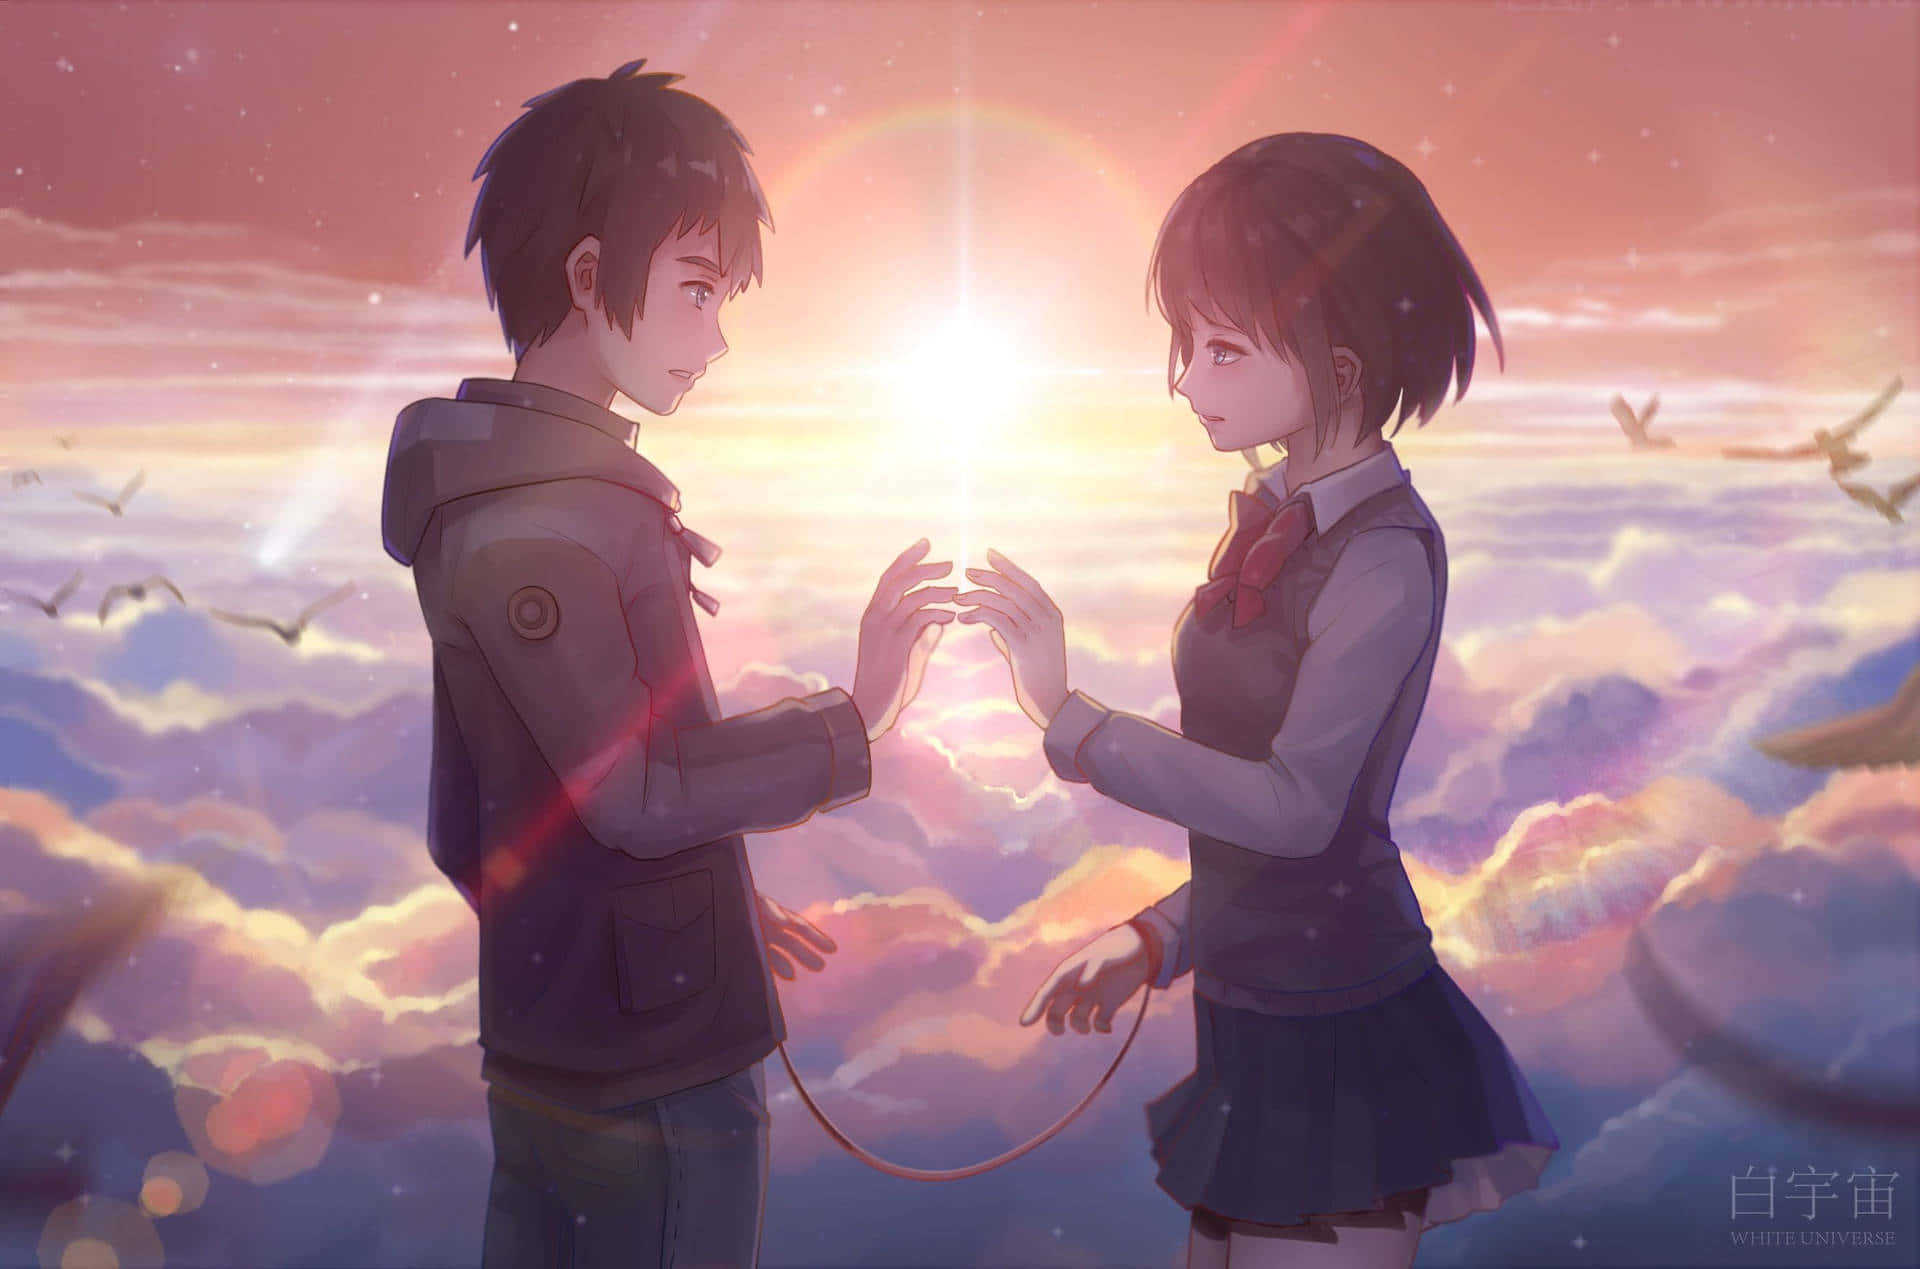 Sweet Anime Couple Enjoying a Romantic Moment